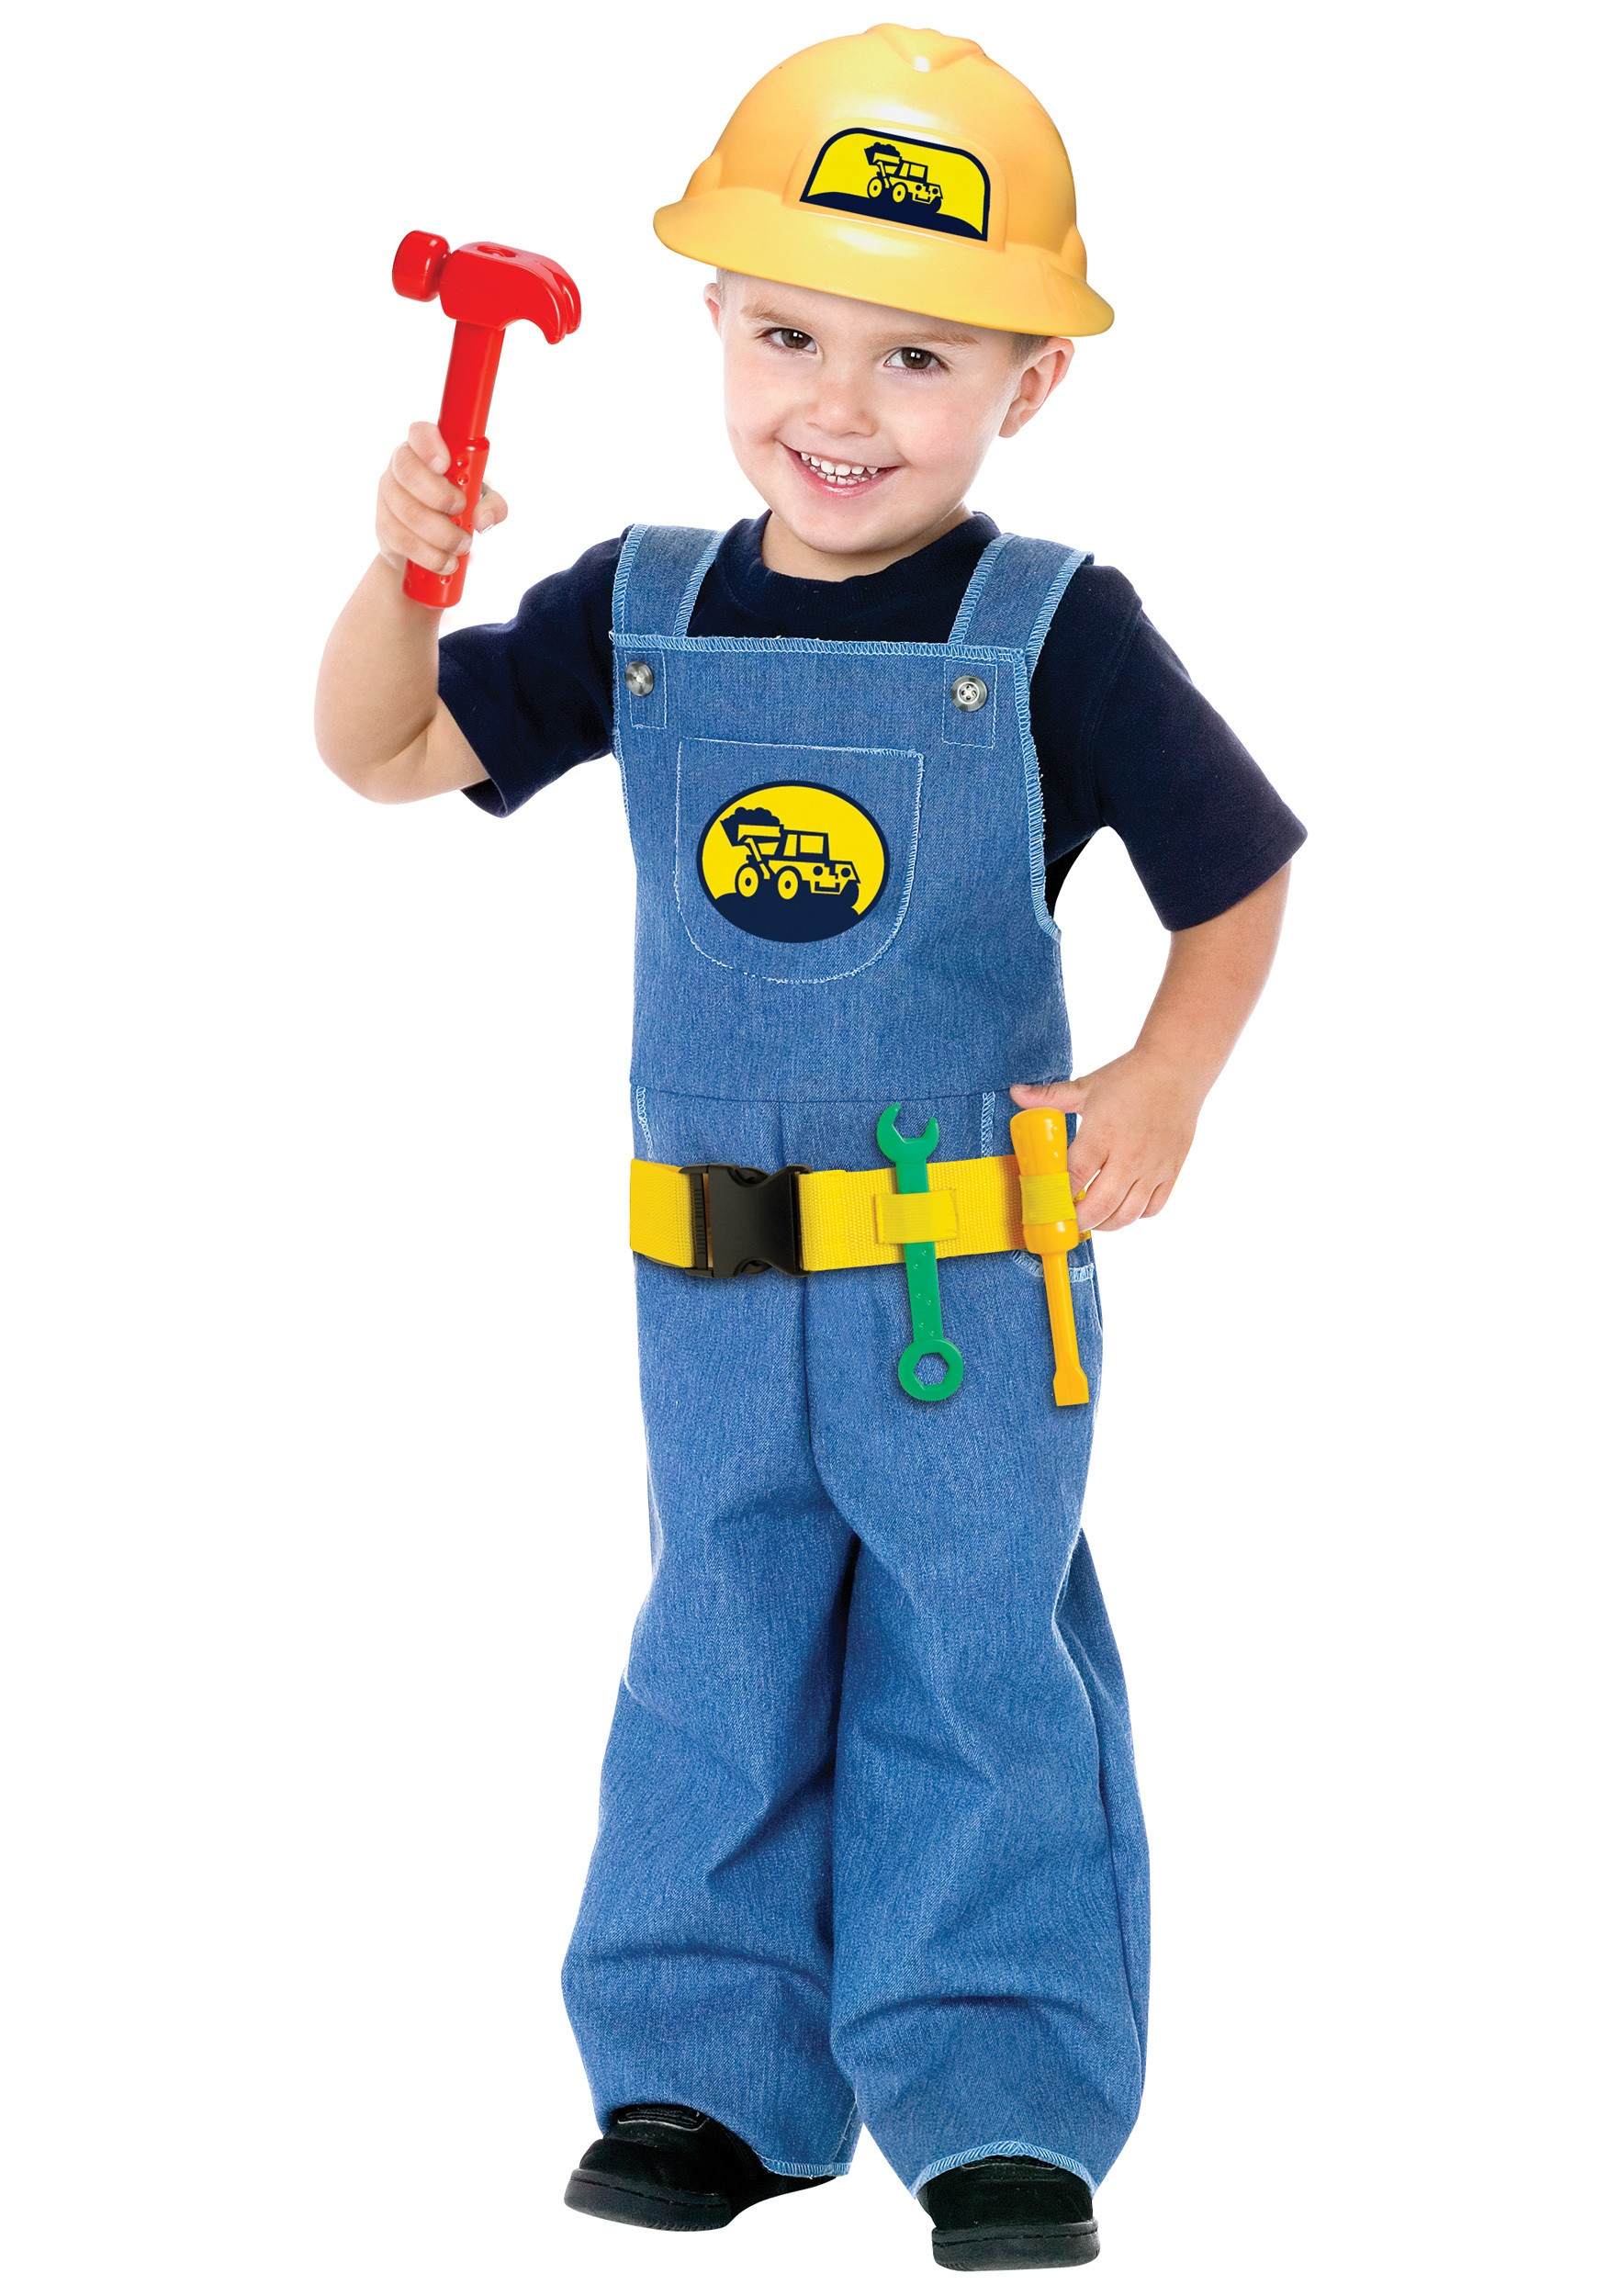 Construction Worker Costume DIY
 Toddler Construction Worker Costume